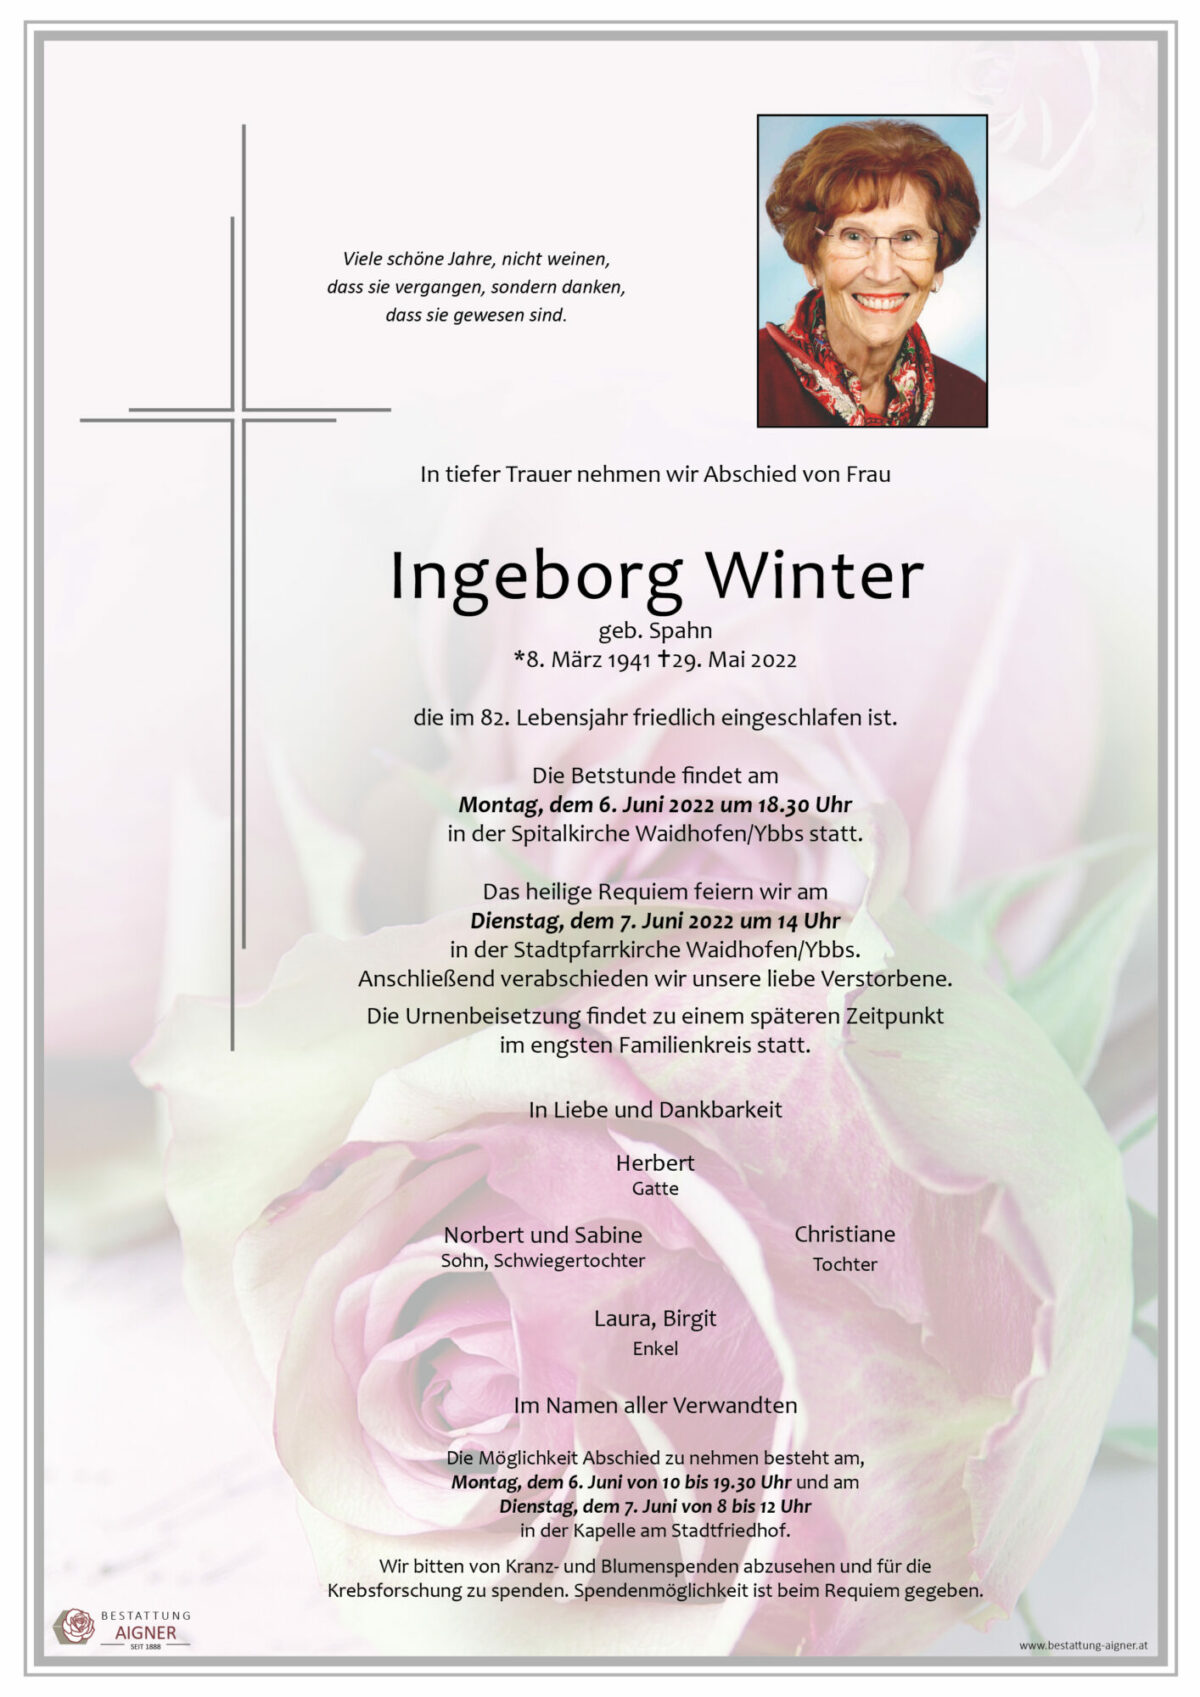 Ingeborg Winter